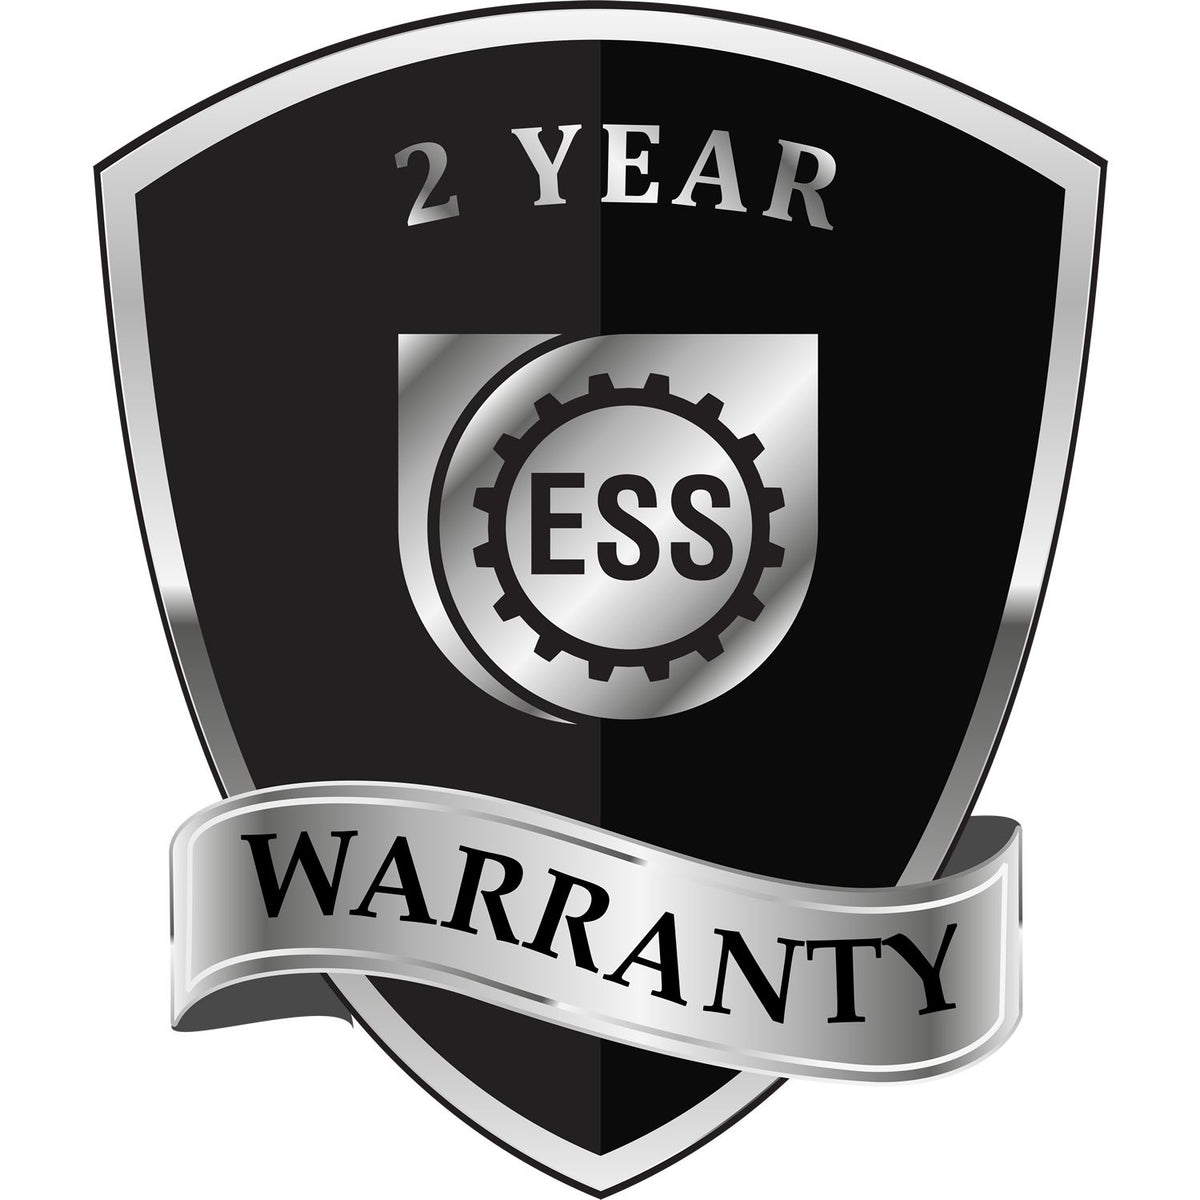 A black and silver badge or emblem showing warranty information for the Gift Delaware Landscape Architect Seal